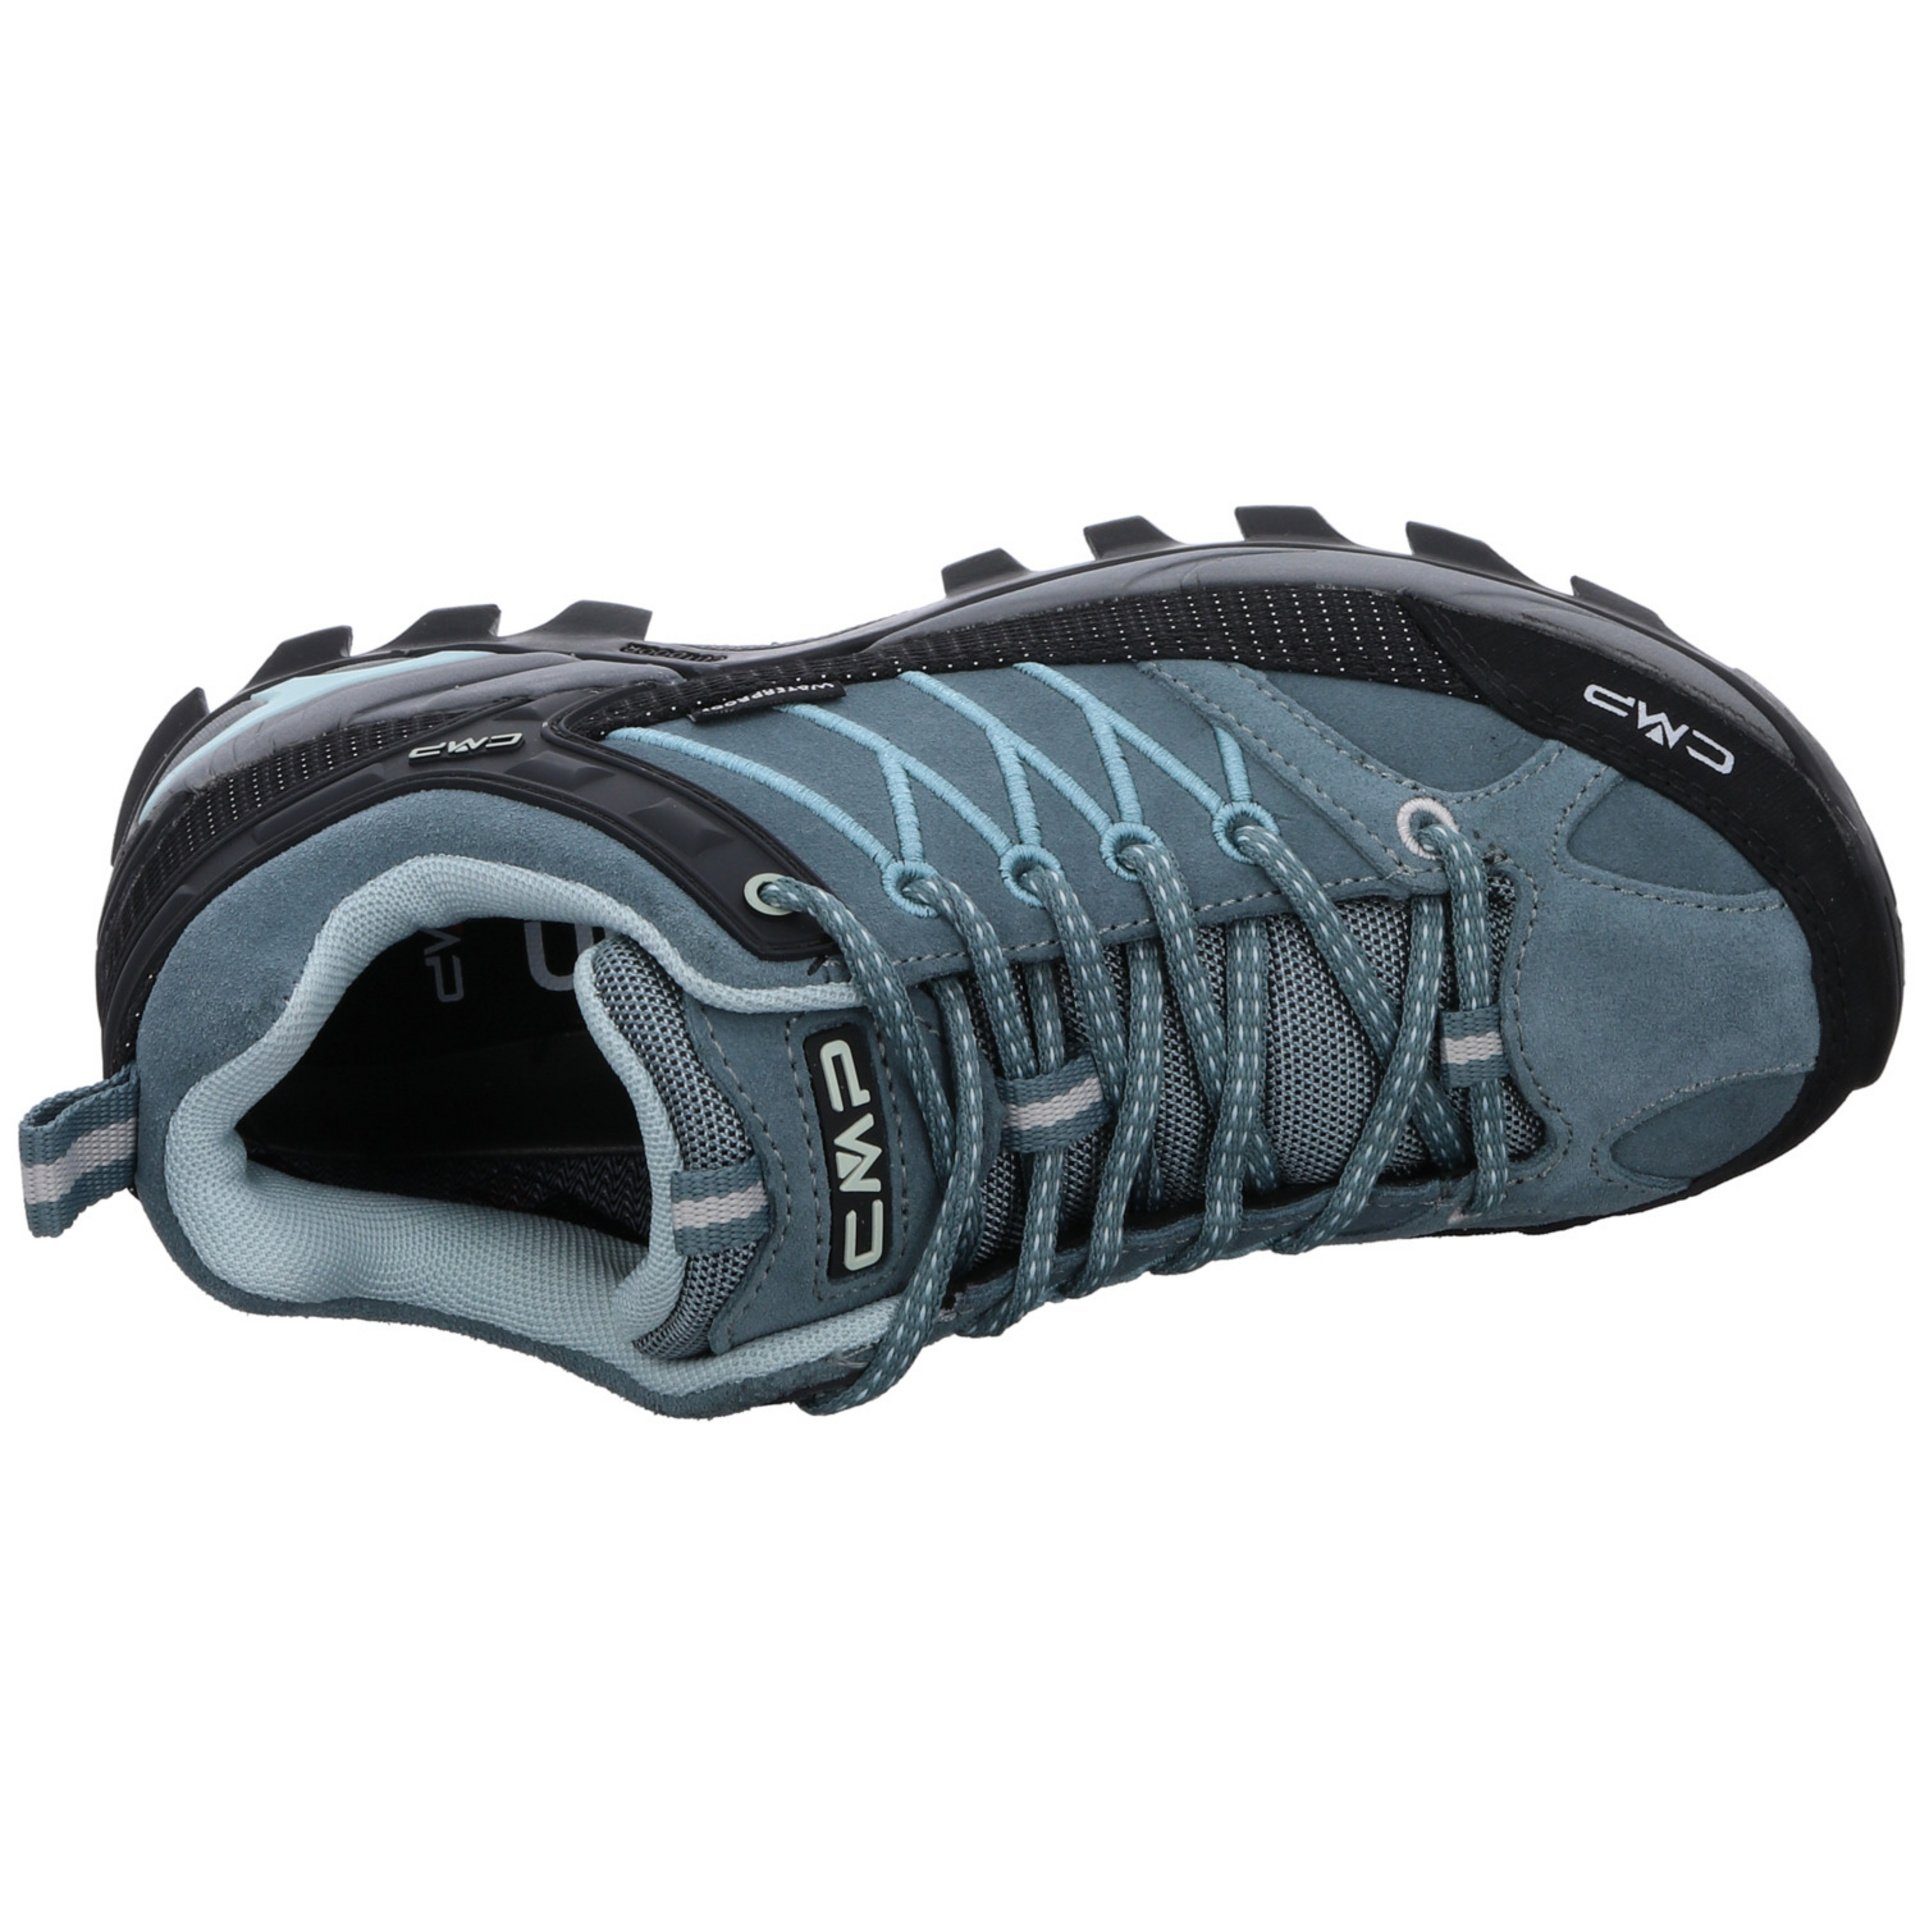 CMP Kombi Outdoorschuh Damen Leder-/Textilkombination Schuhe CAMPAGNOLO Outdoor Rigel Outdoorschuh Low sonst blau